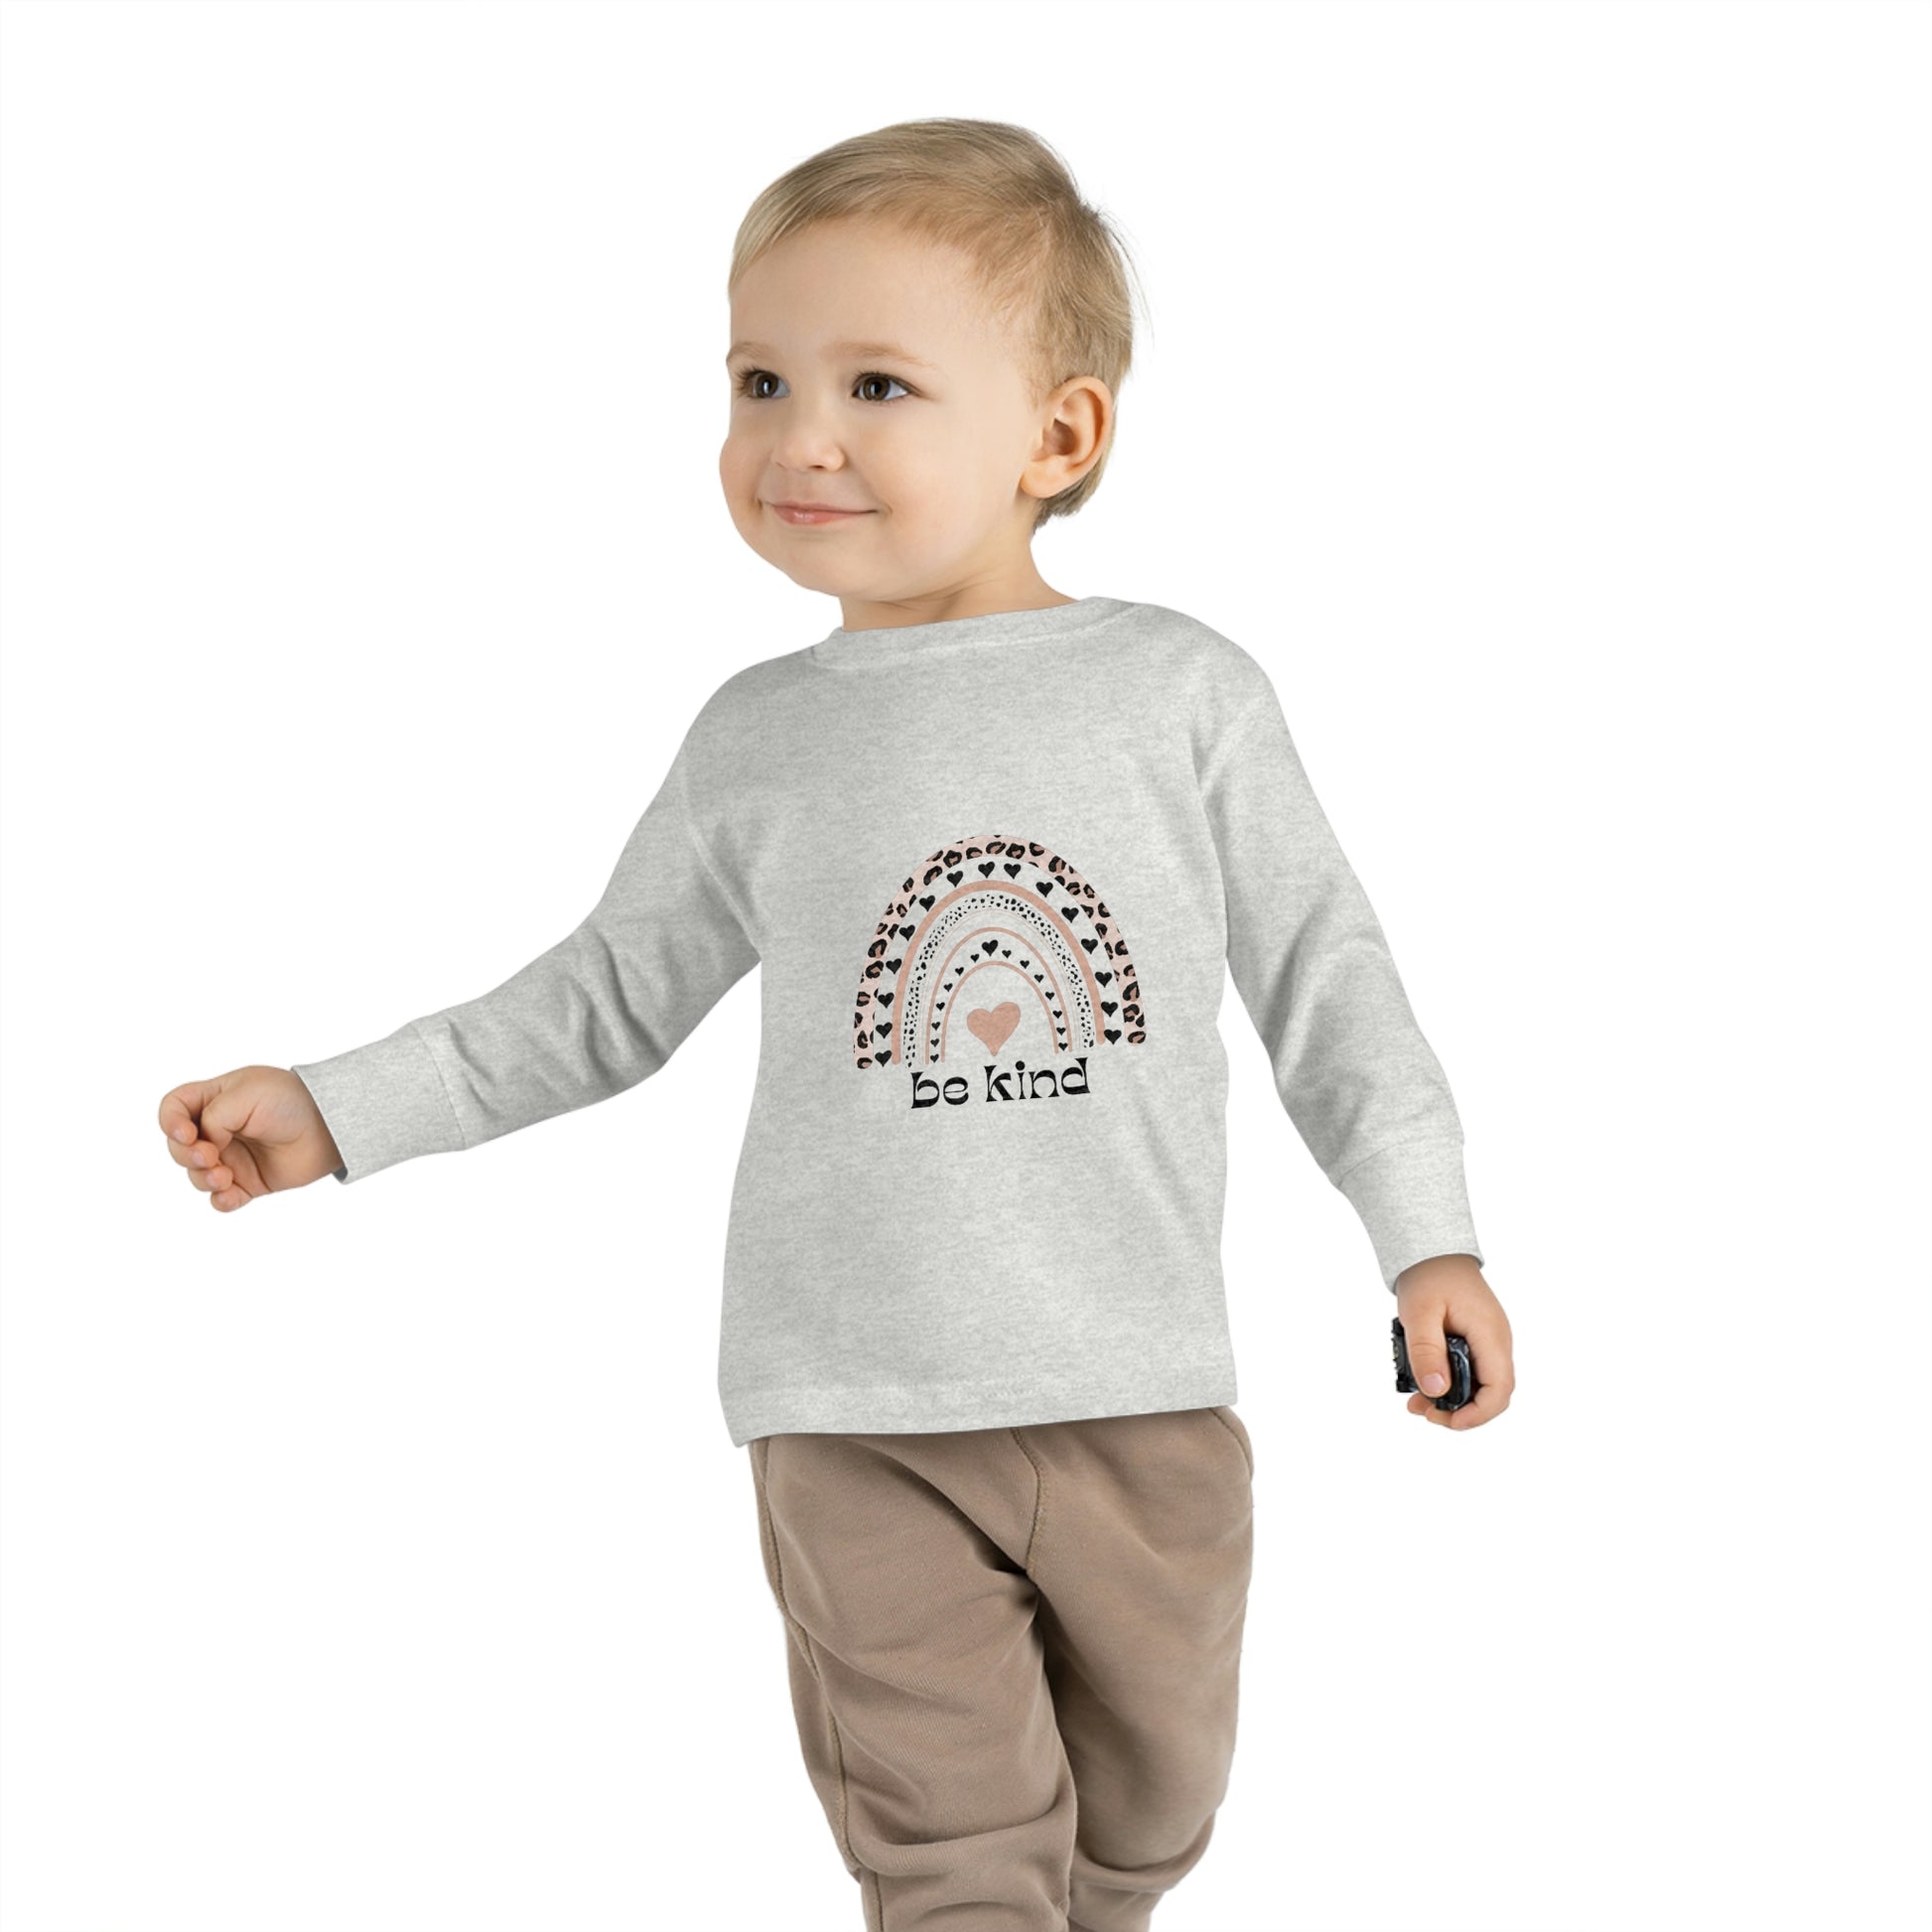 Toddler Long Sleeve Shirt Be & Shipping Jimini – Kind Sia - Free